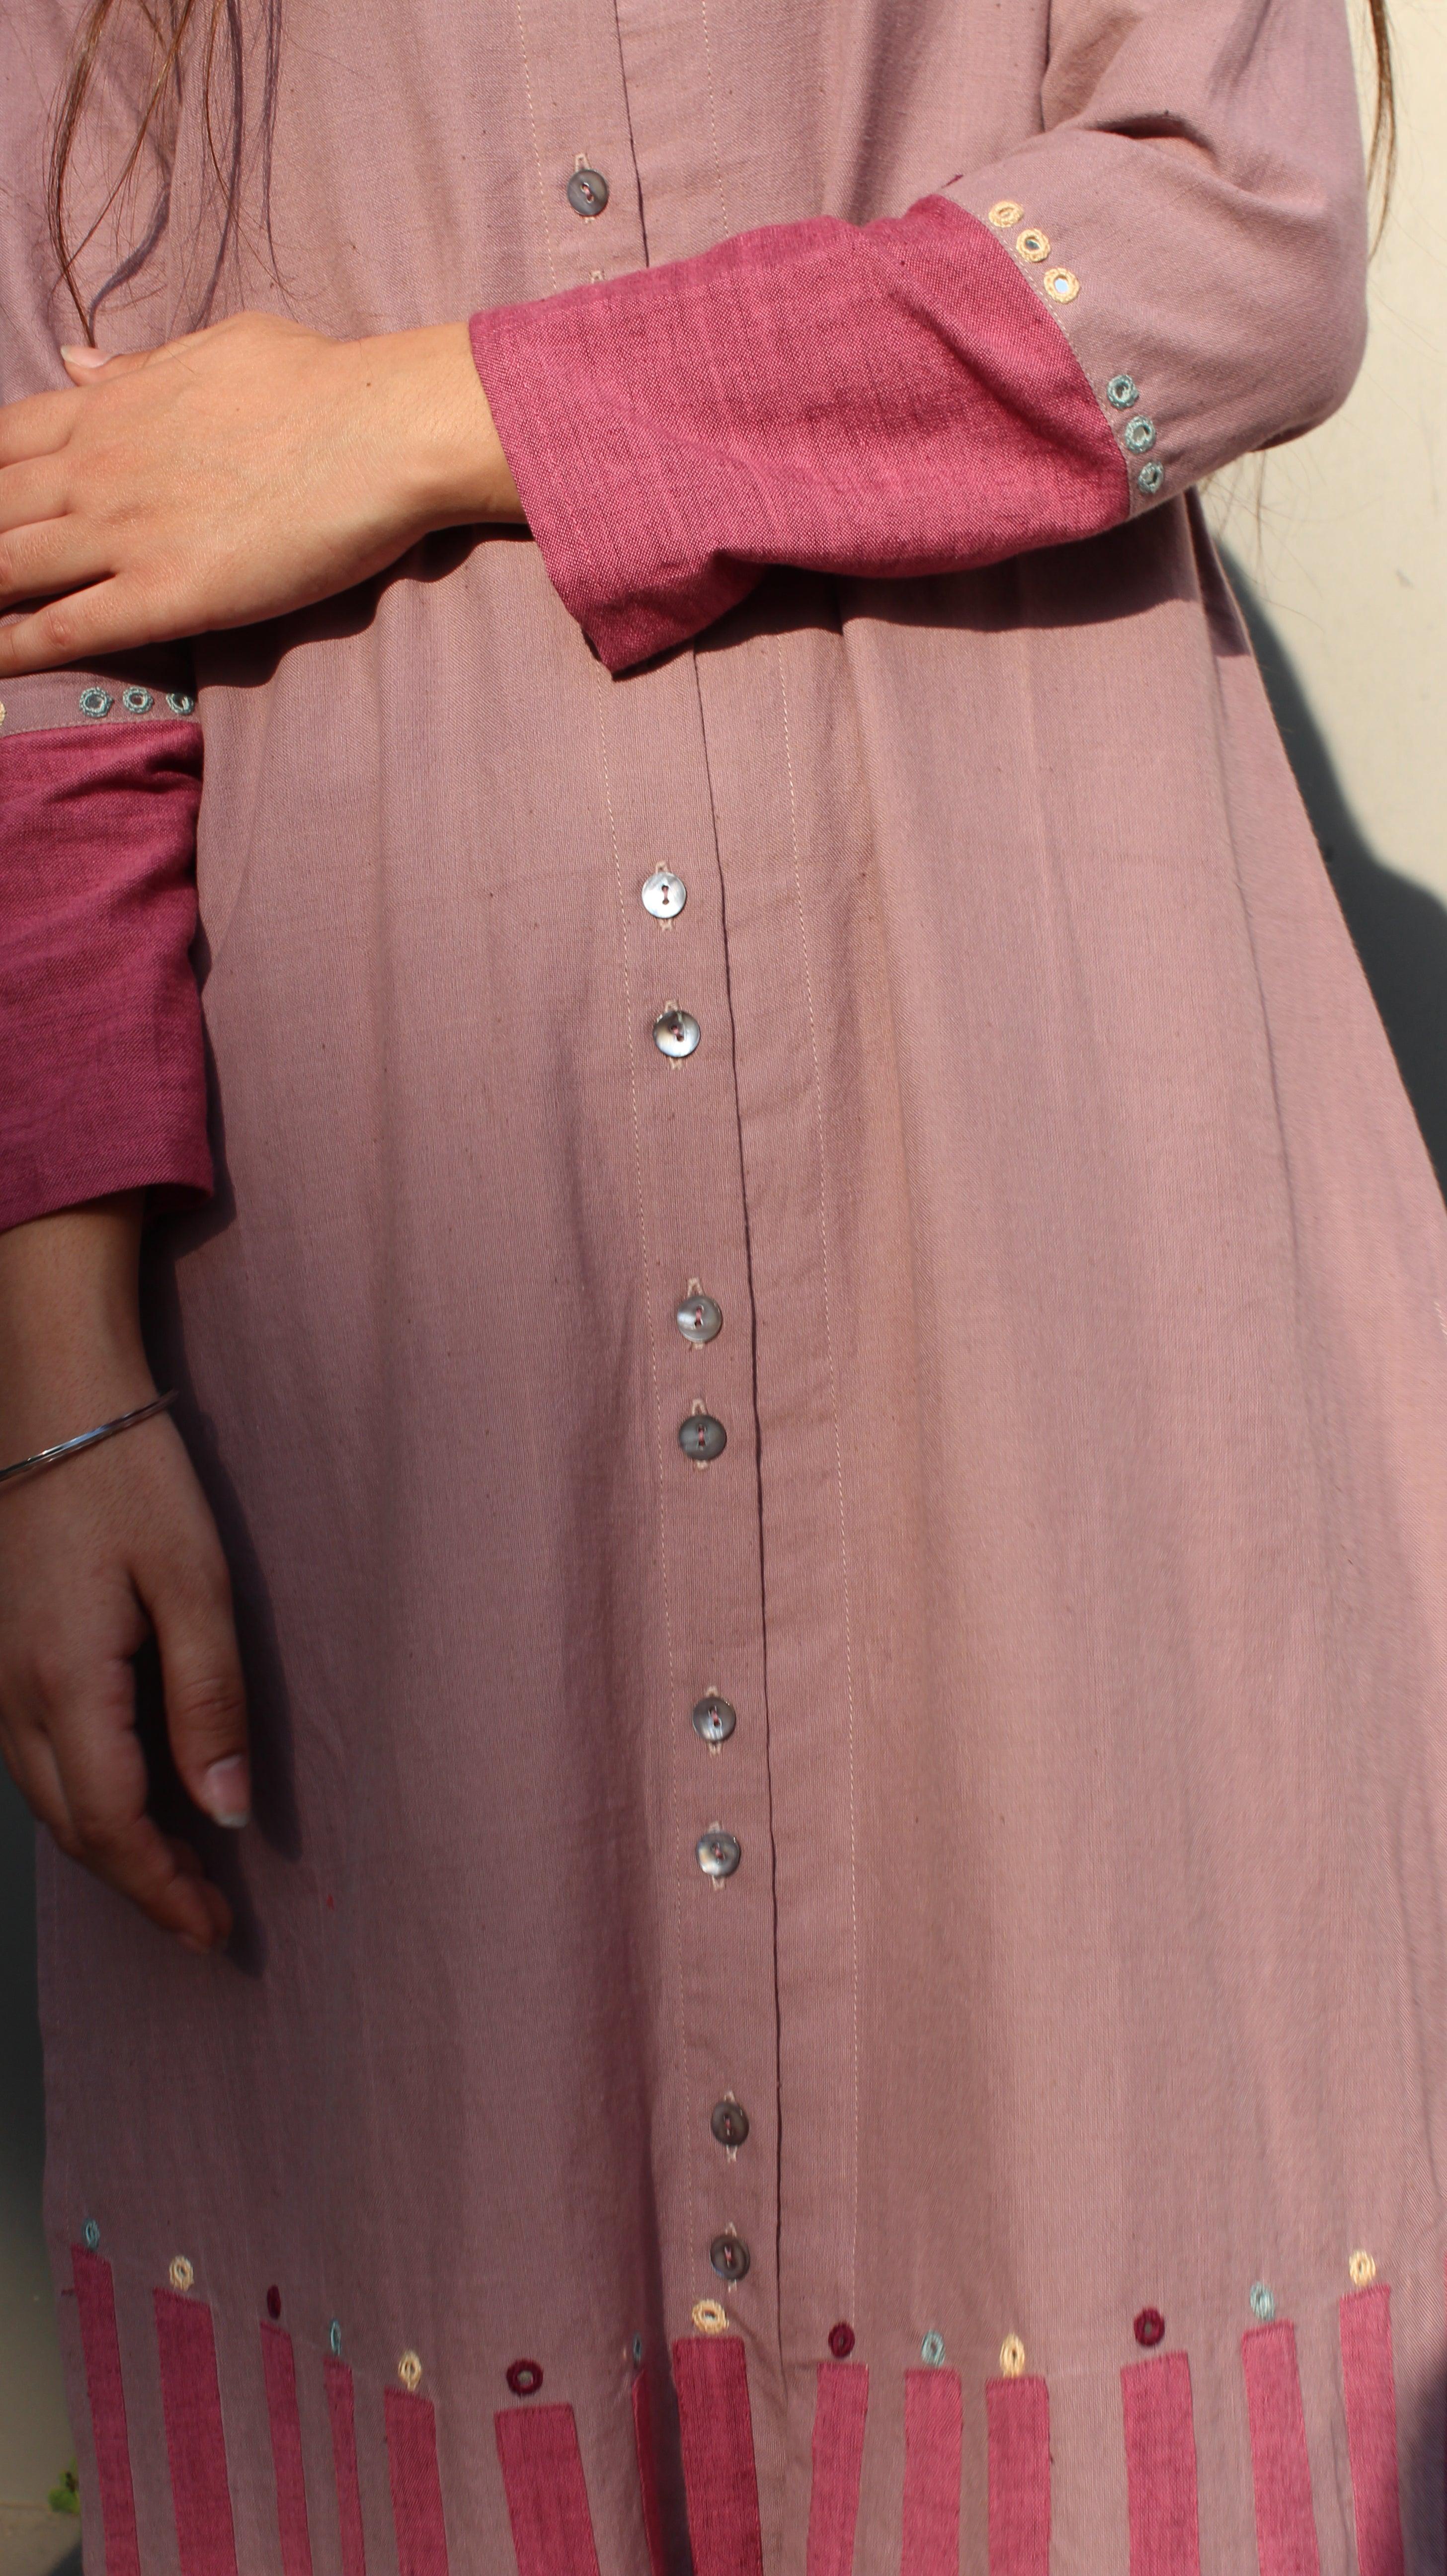 Dusty Lavender applique and mirror detail handloom kurta and pants set - Sohni